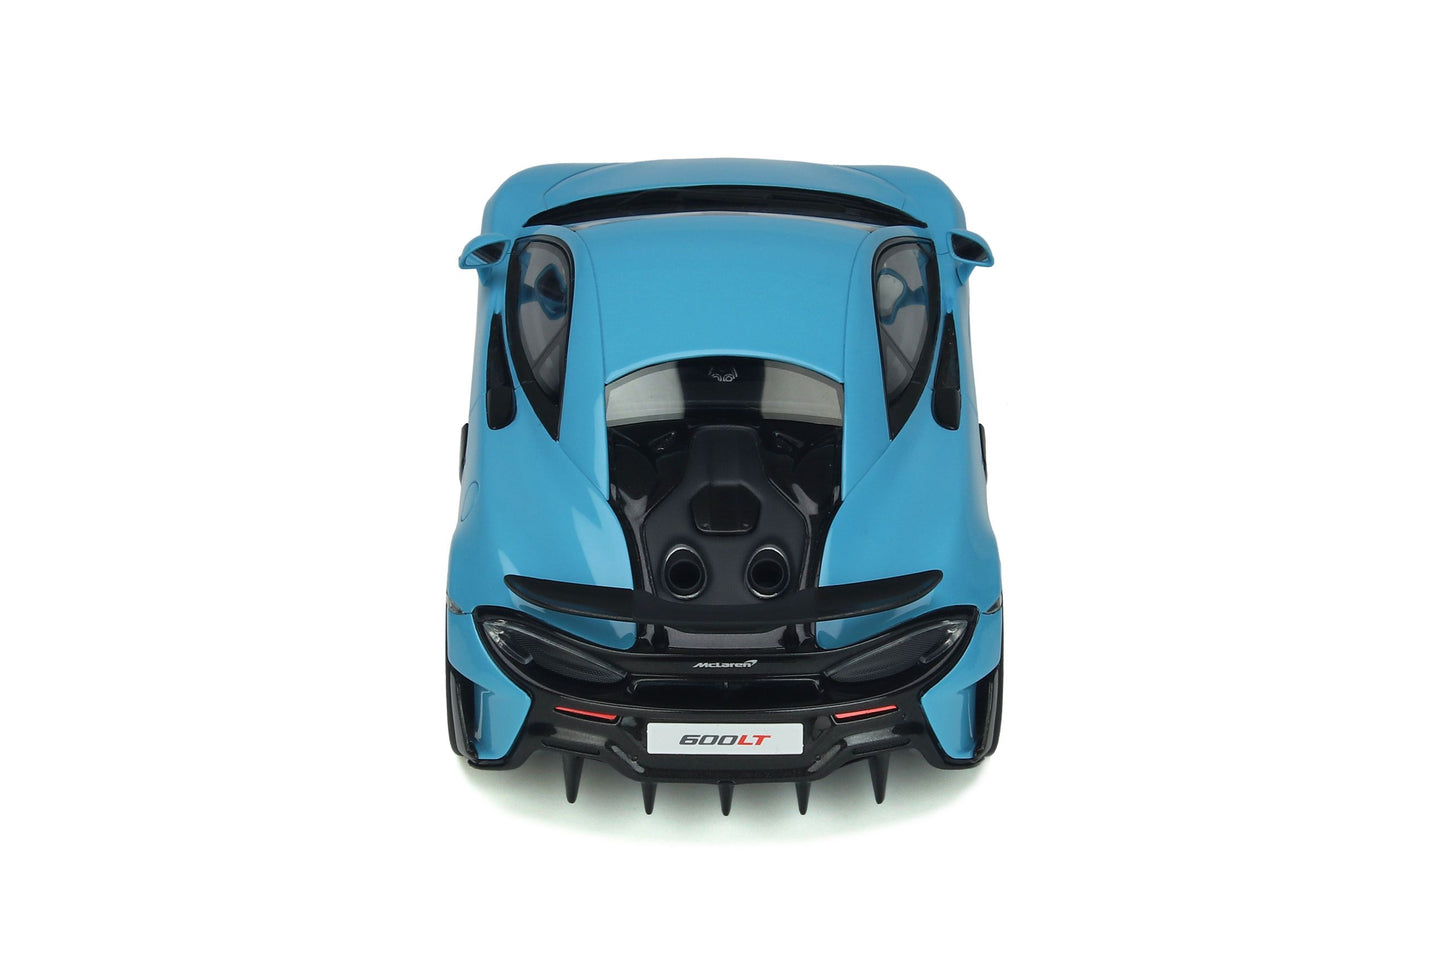 GT Spirit - McLaren 600LT (Blue) 1:18 Scale Model Car